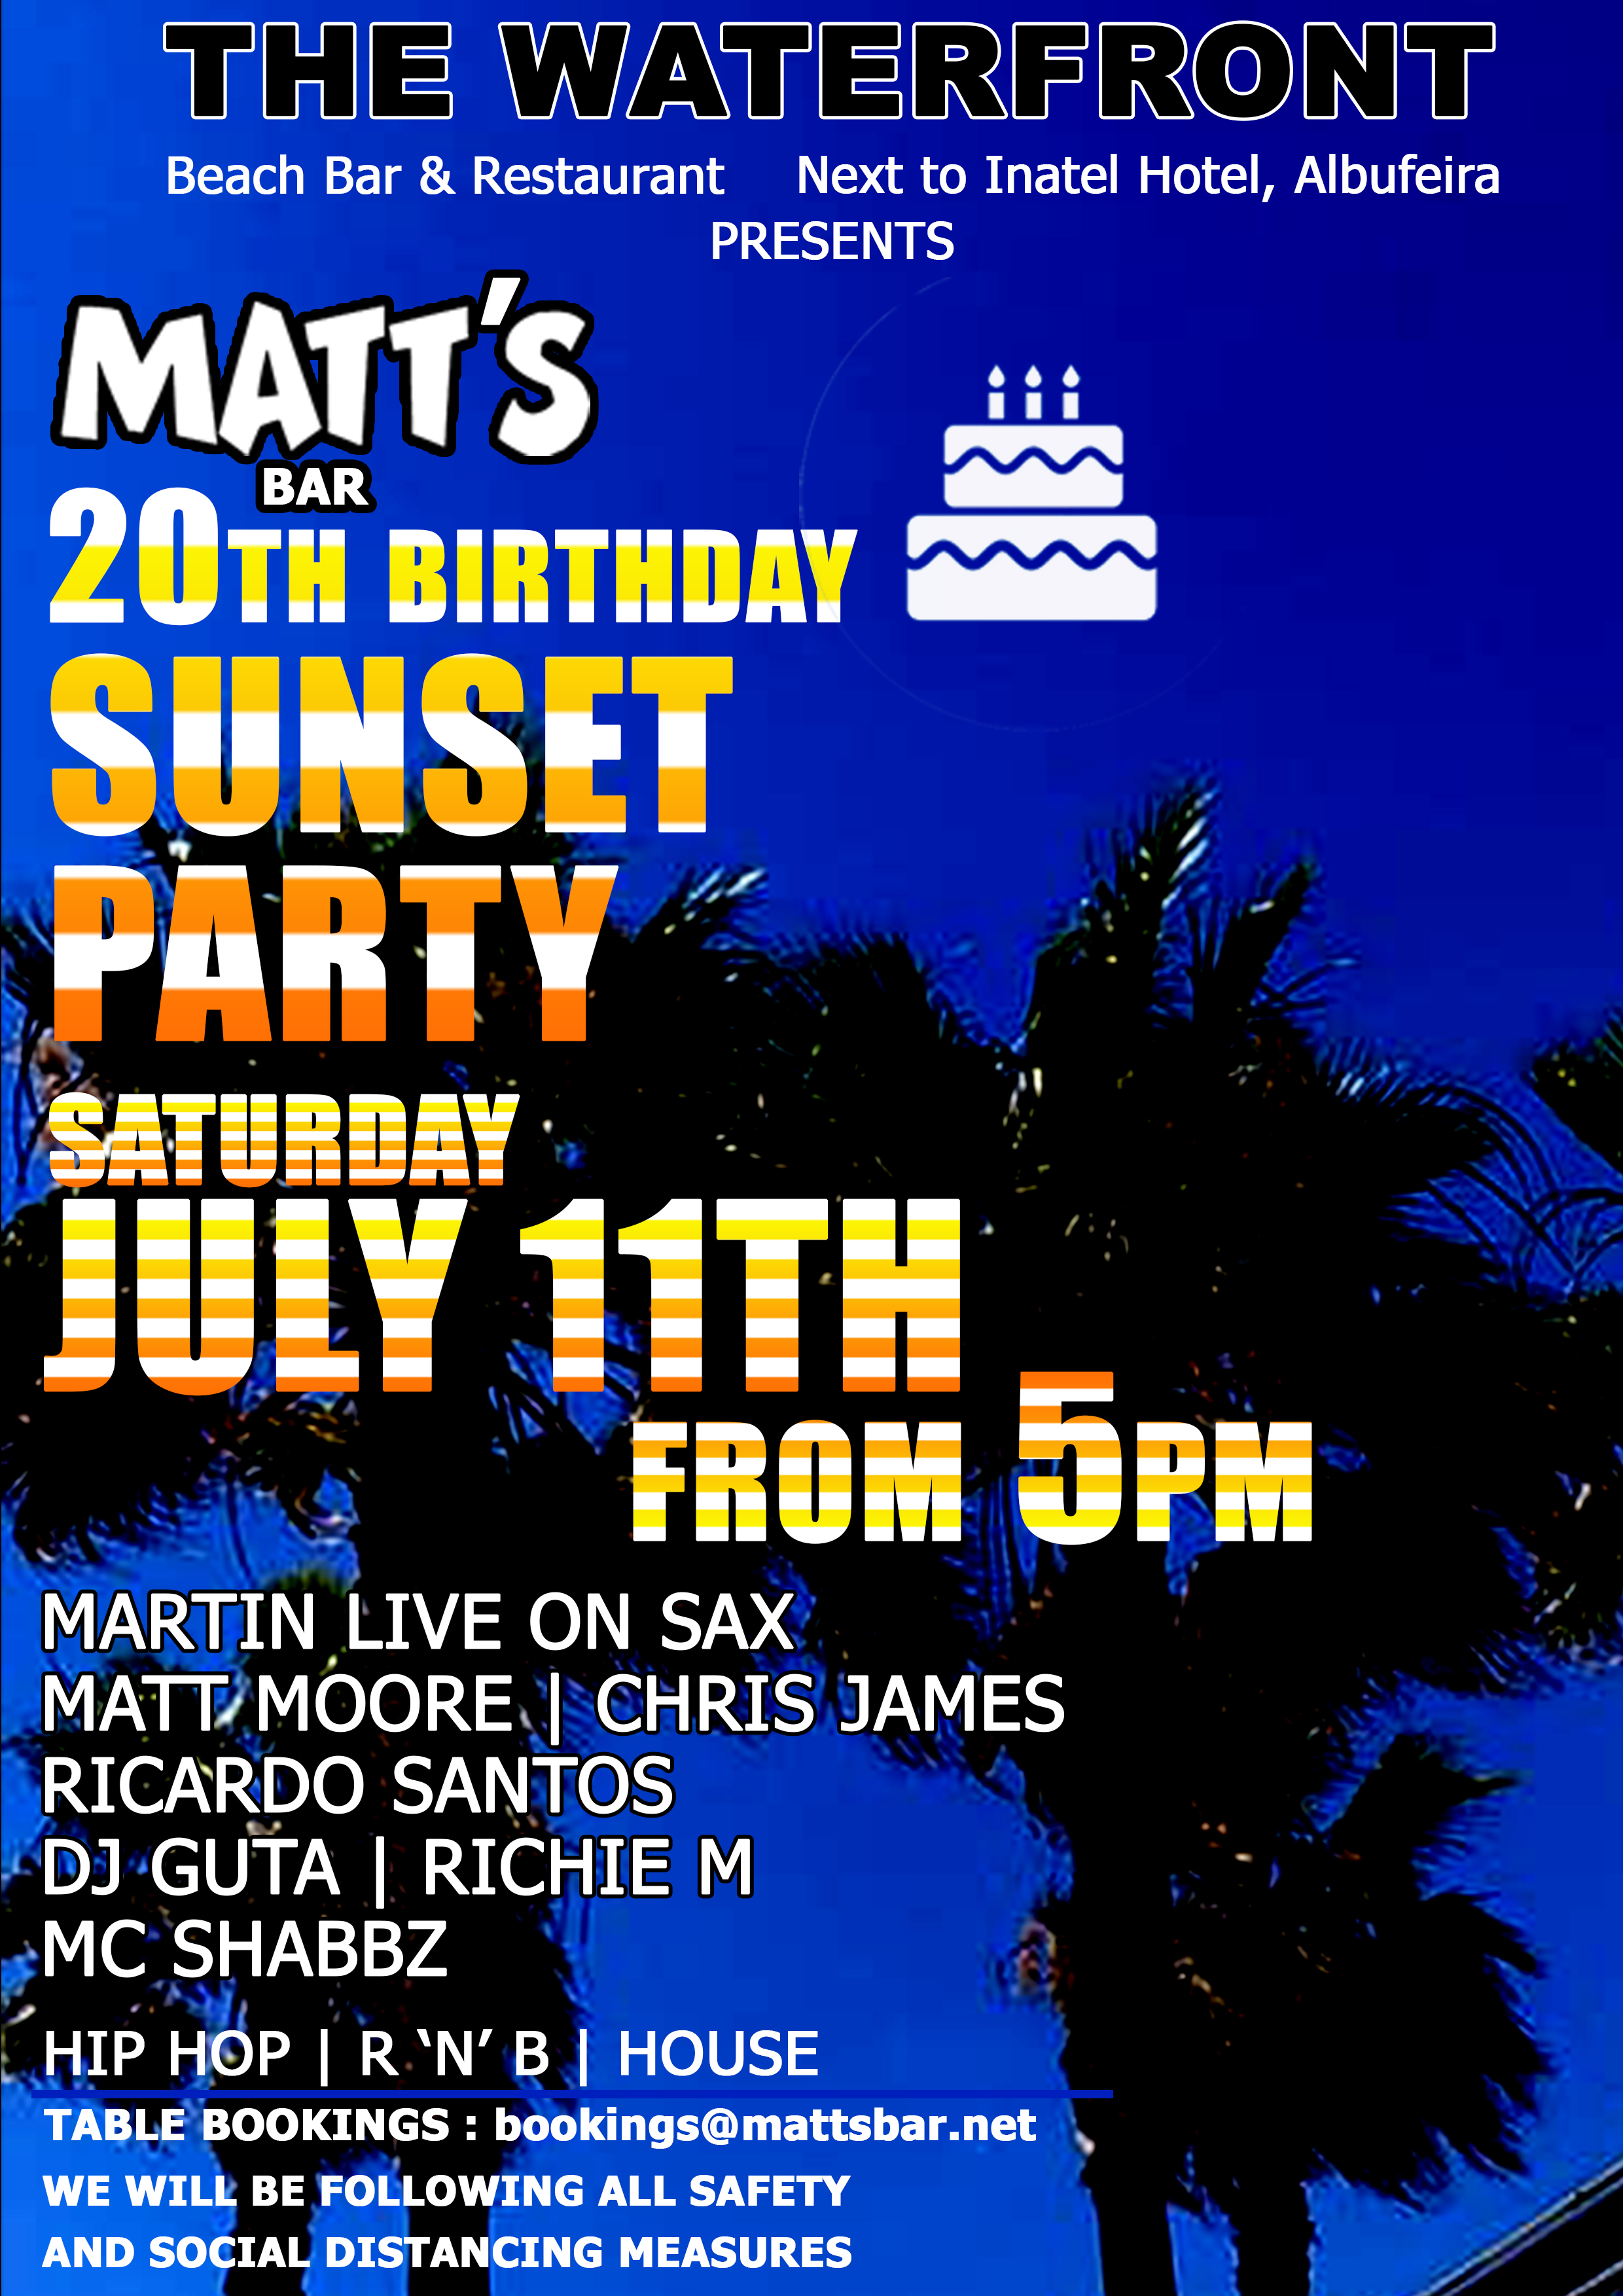 MATT’S BAR 20TH BIRTHDAY – SUNSET PARTY @ THE WATERFRONT